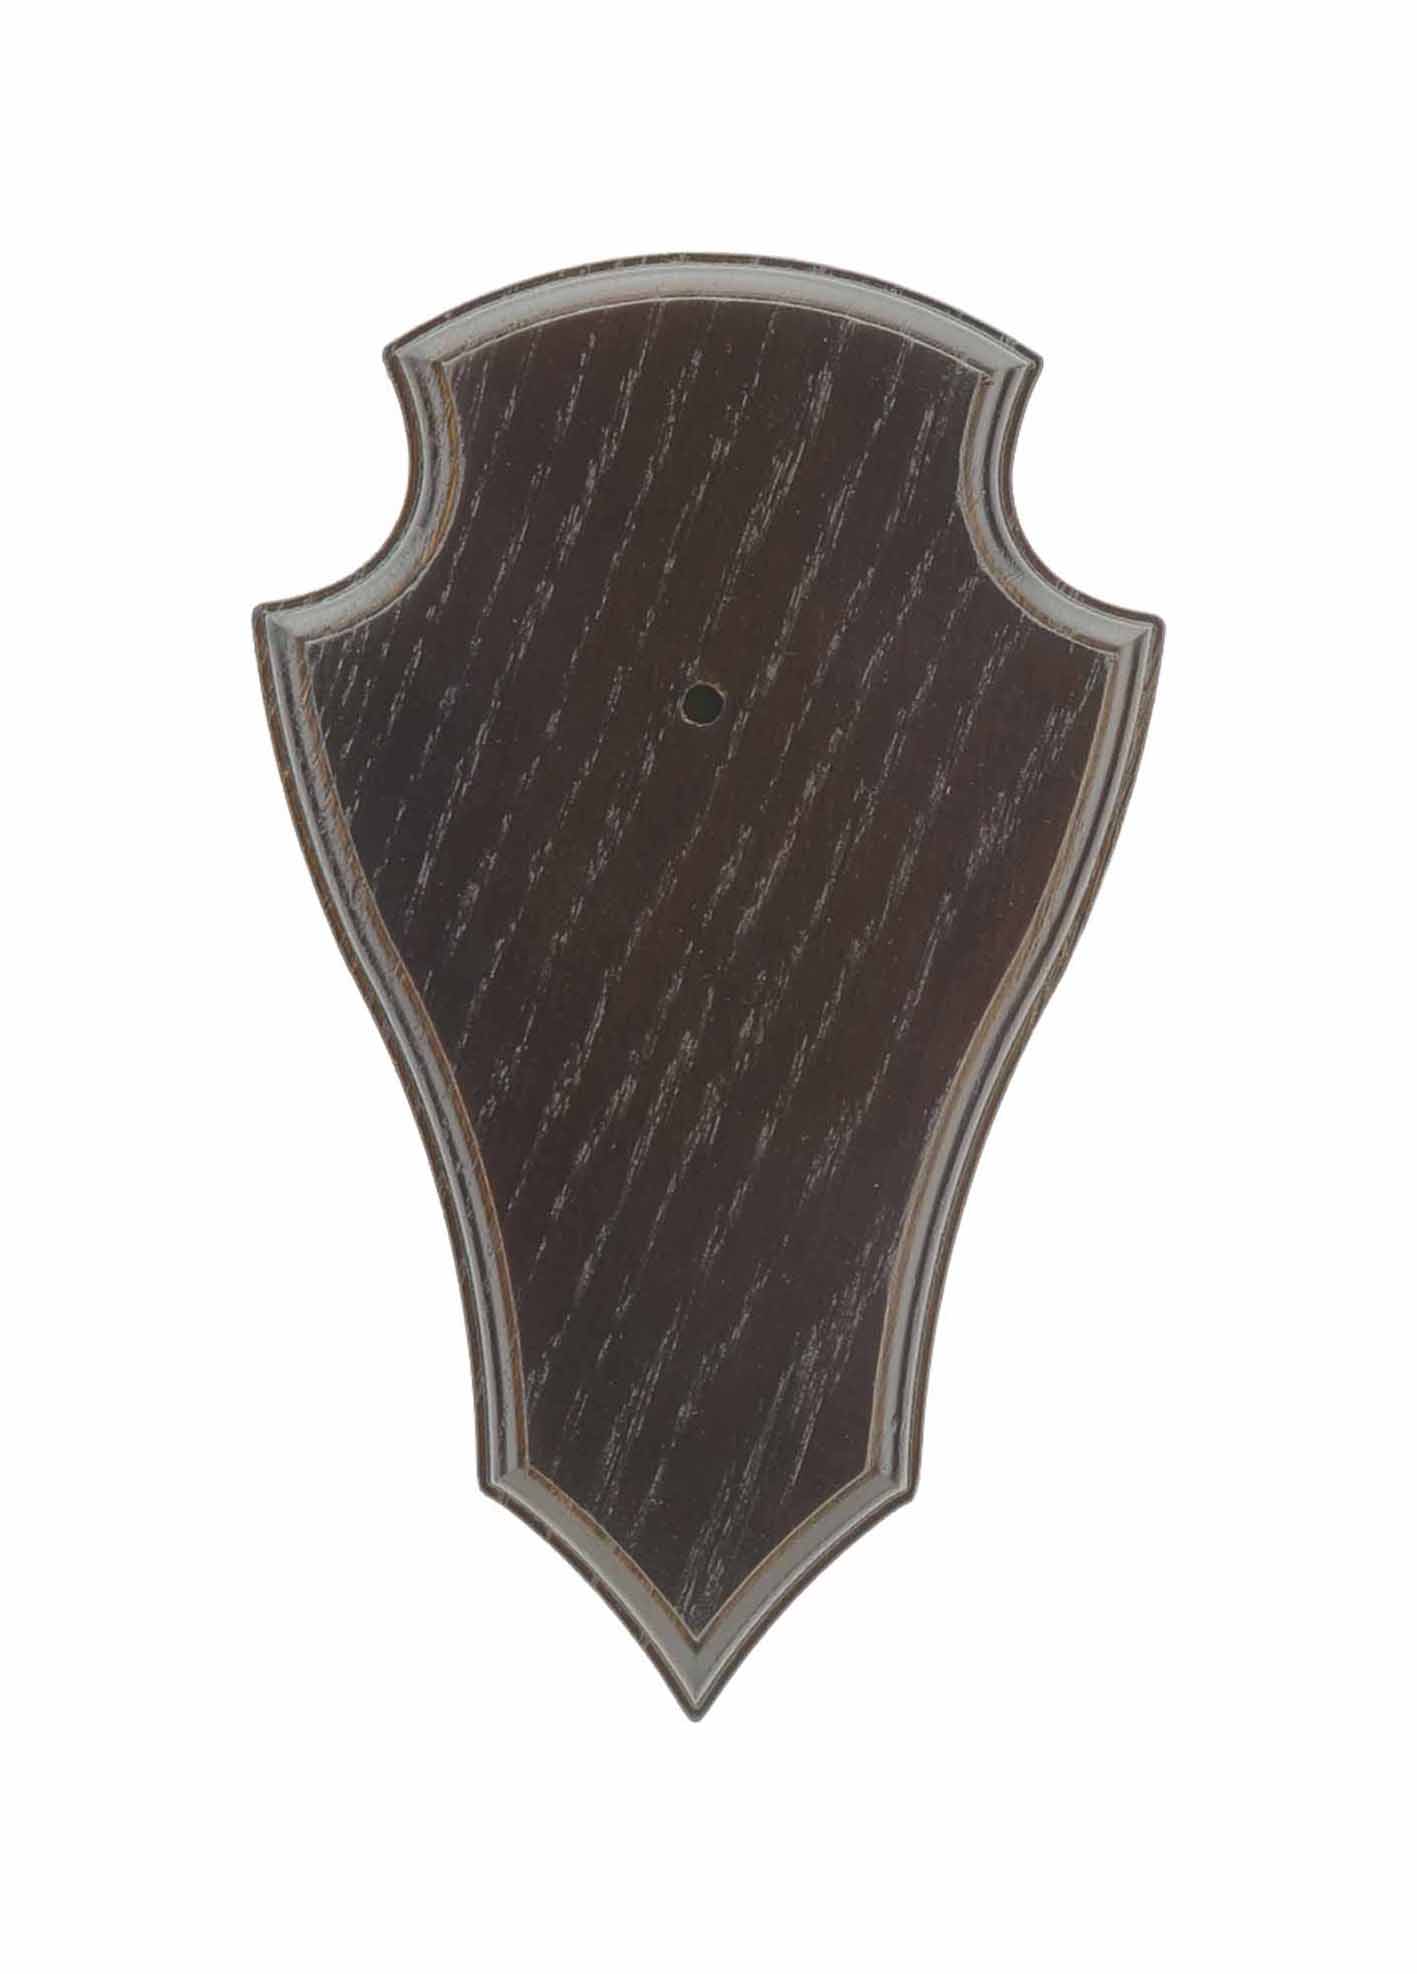 Oak Deer Trophy Plate 2 22x13 dark - set of 10 with clips